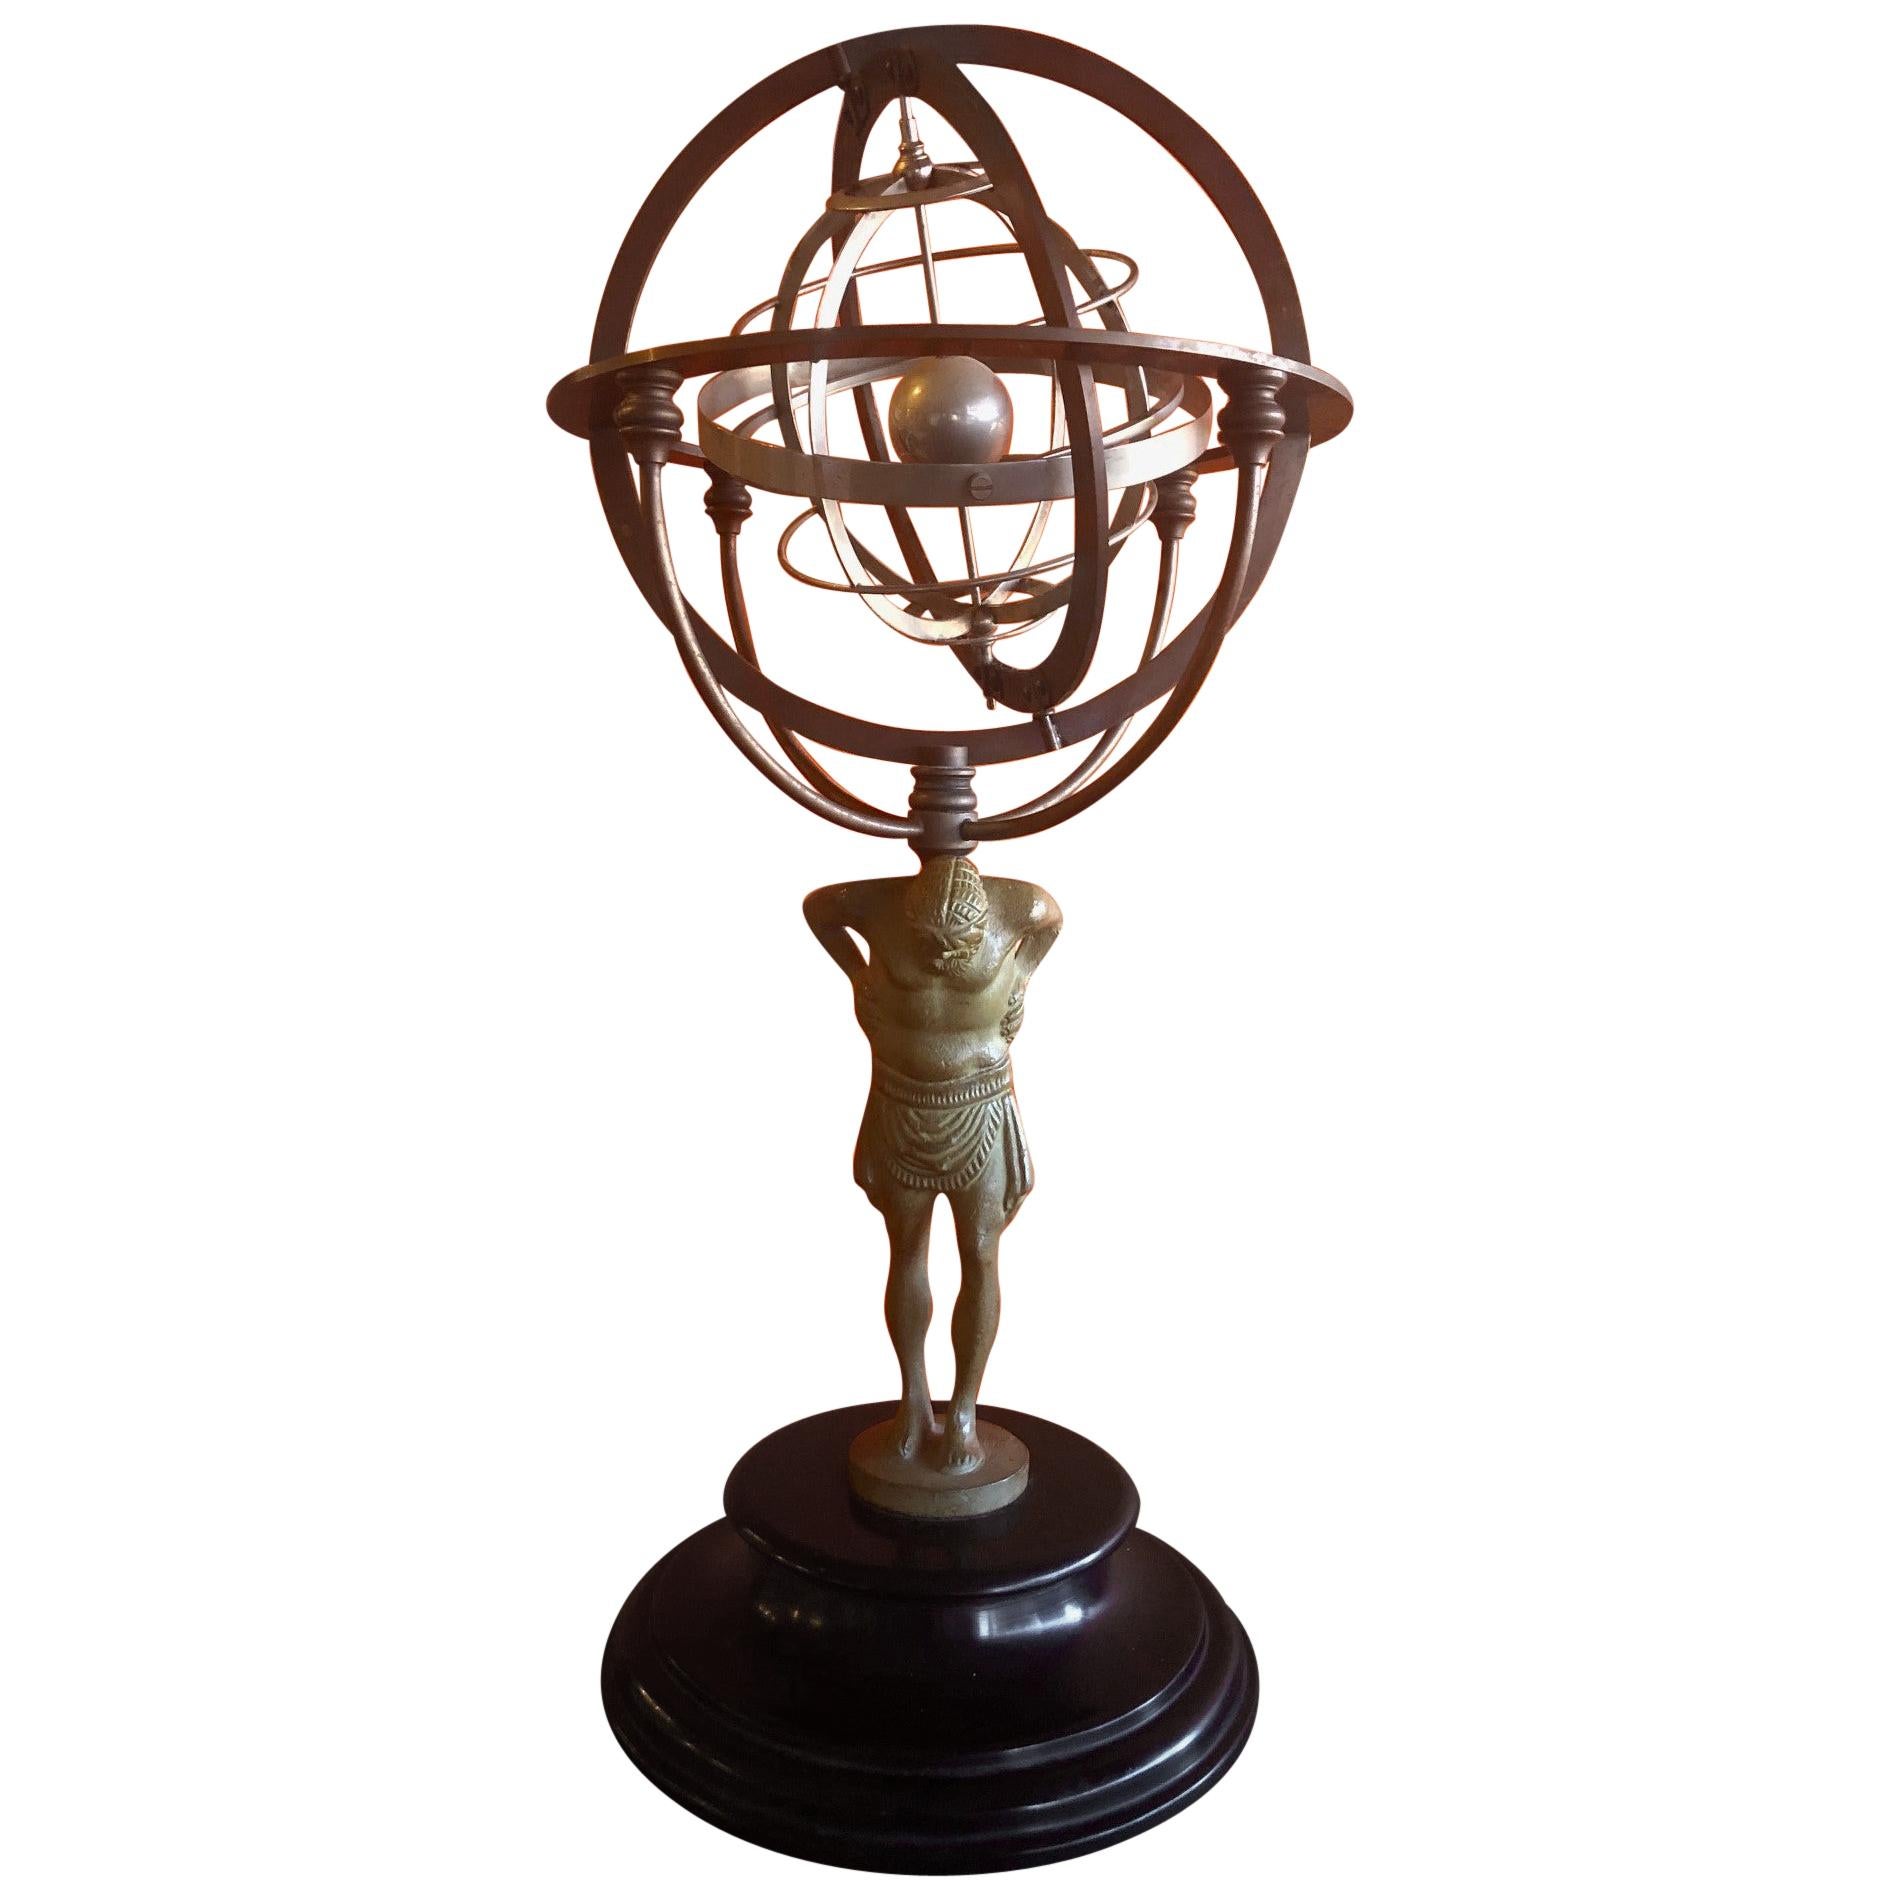 Atlas Armillary Sphere Statue on Black Marble Base